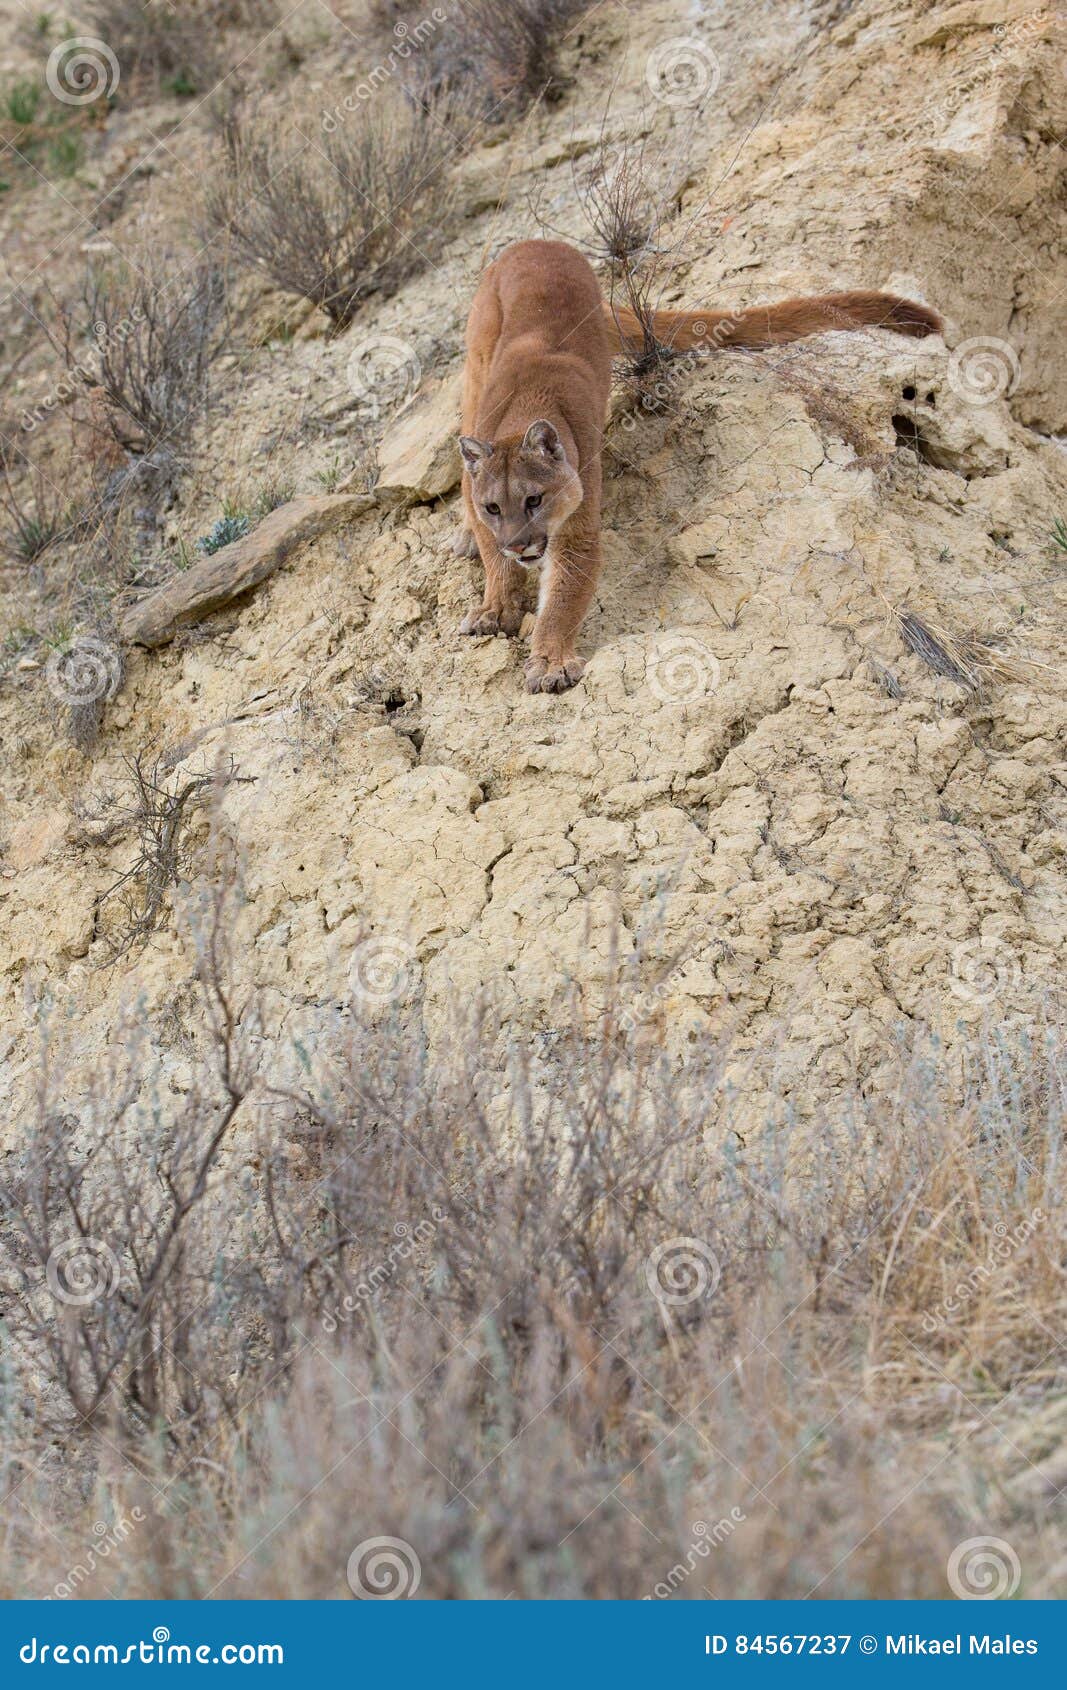 mountain lion walking down steep ravine